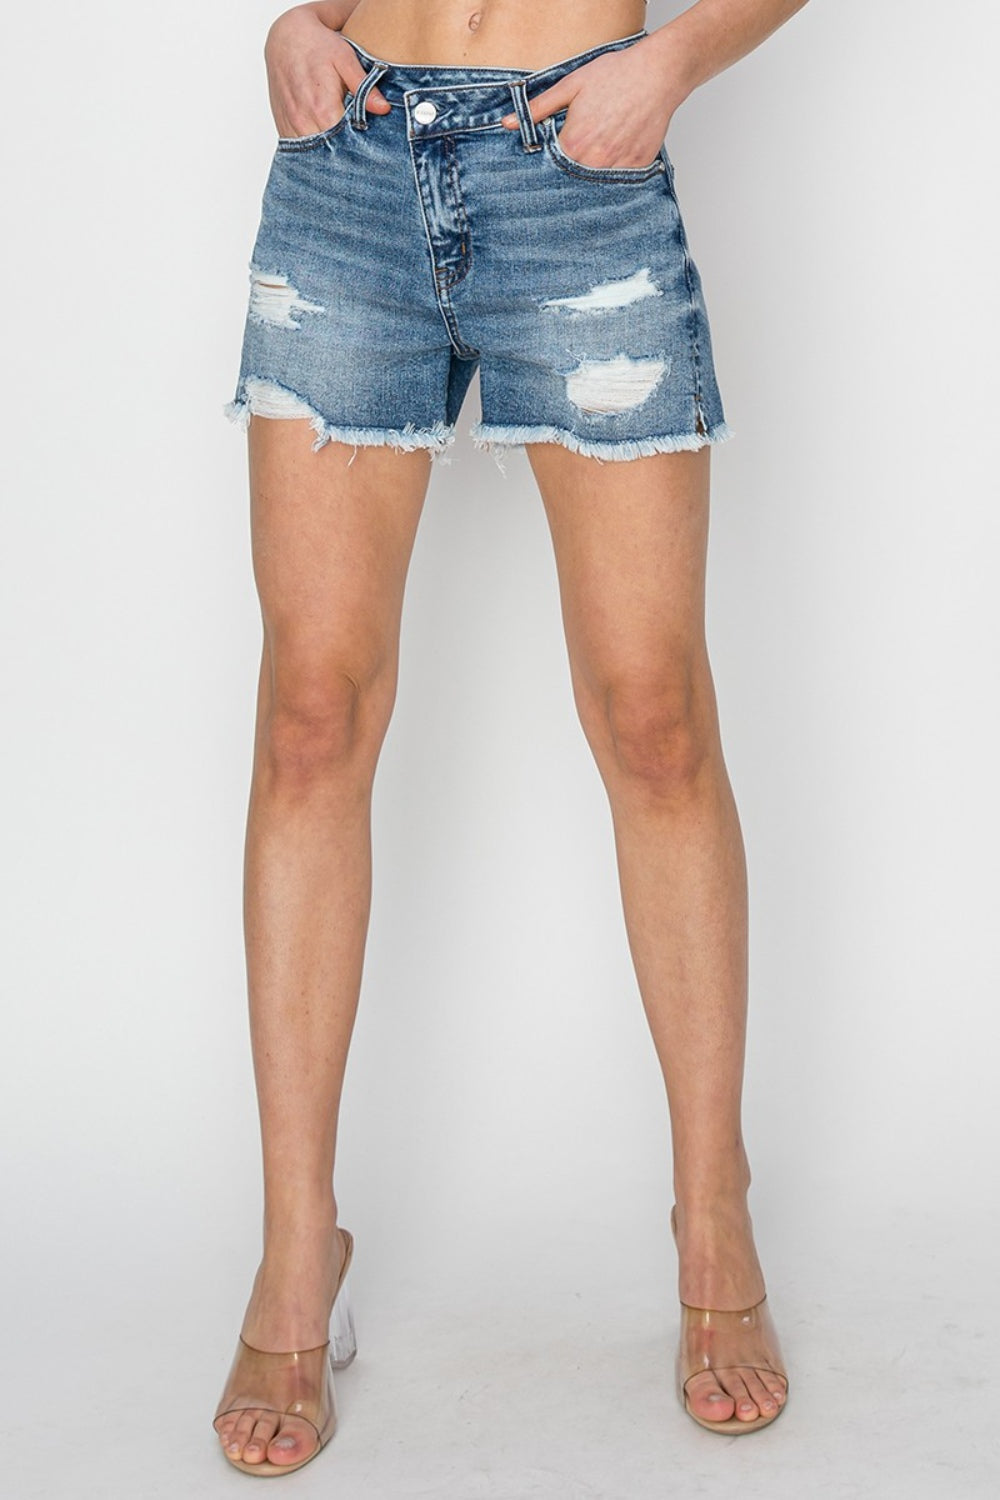 Stepped Waist Frayed Denim Shorts for Women | Shorts | Ro + Ivy